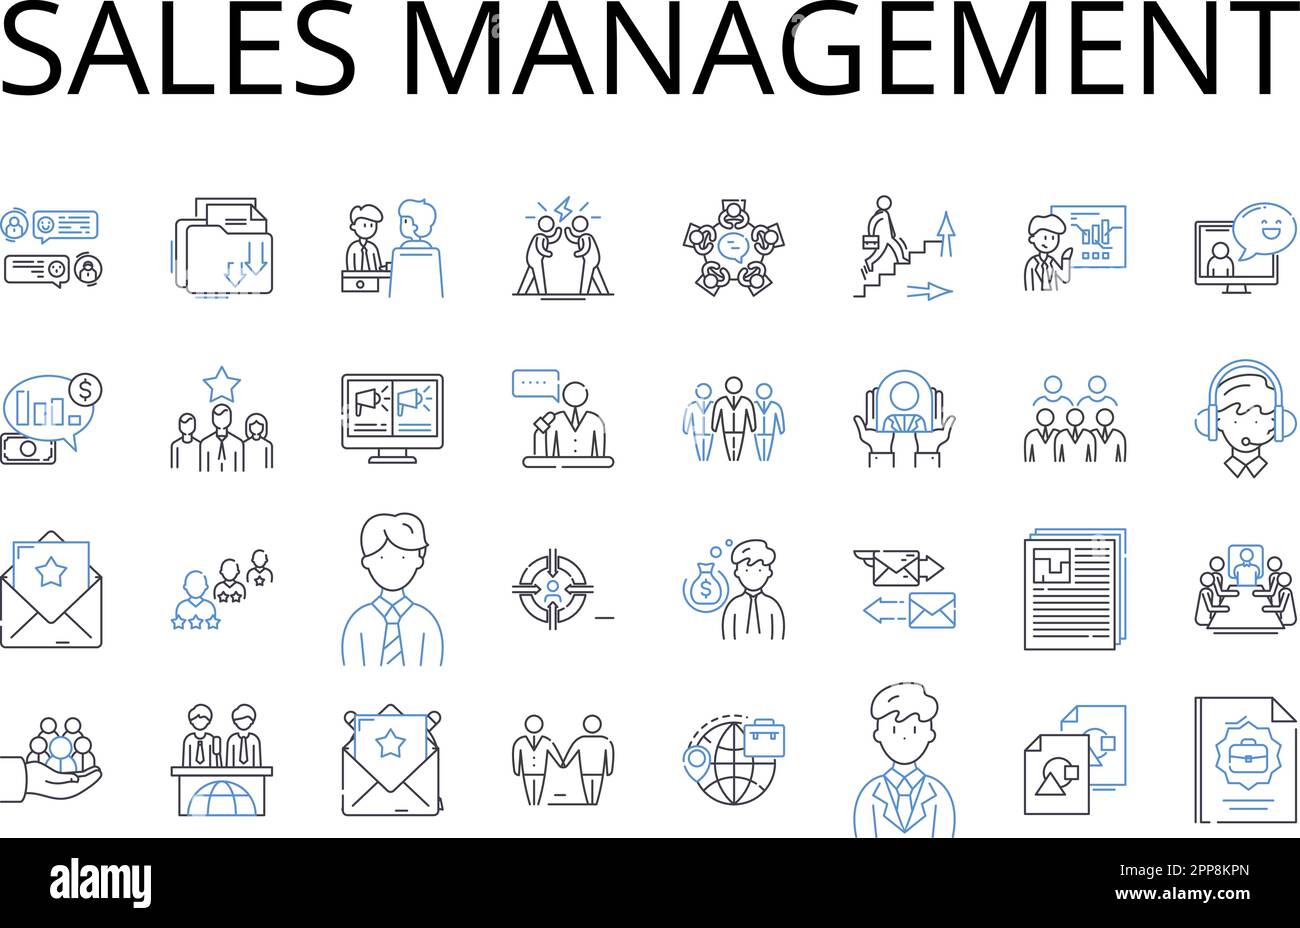 Sales management line icons collection. Sales leadership, Marketing management, Team organization, Account management, Brand management, Customer Stock Vector